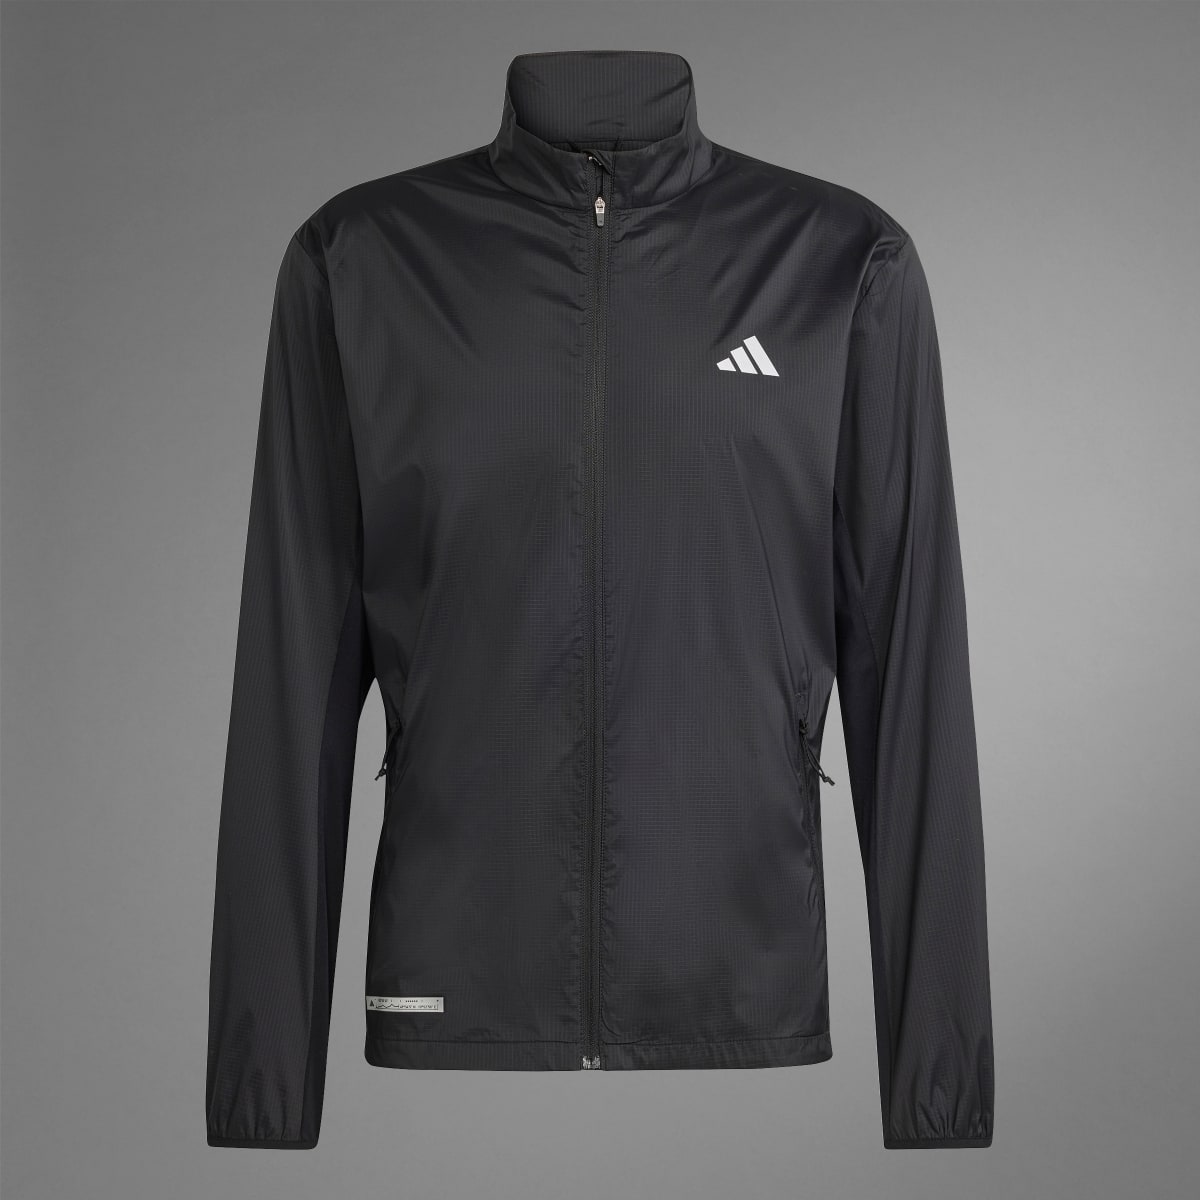 Adidas Ultimateadidas Allover Print Jacket. 9